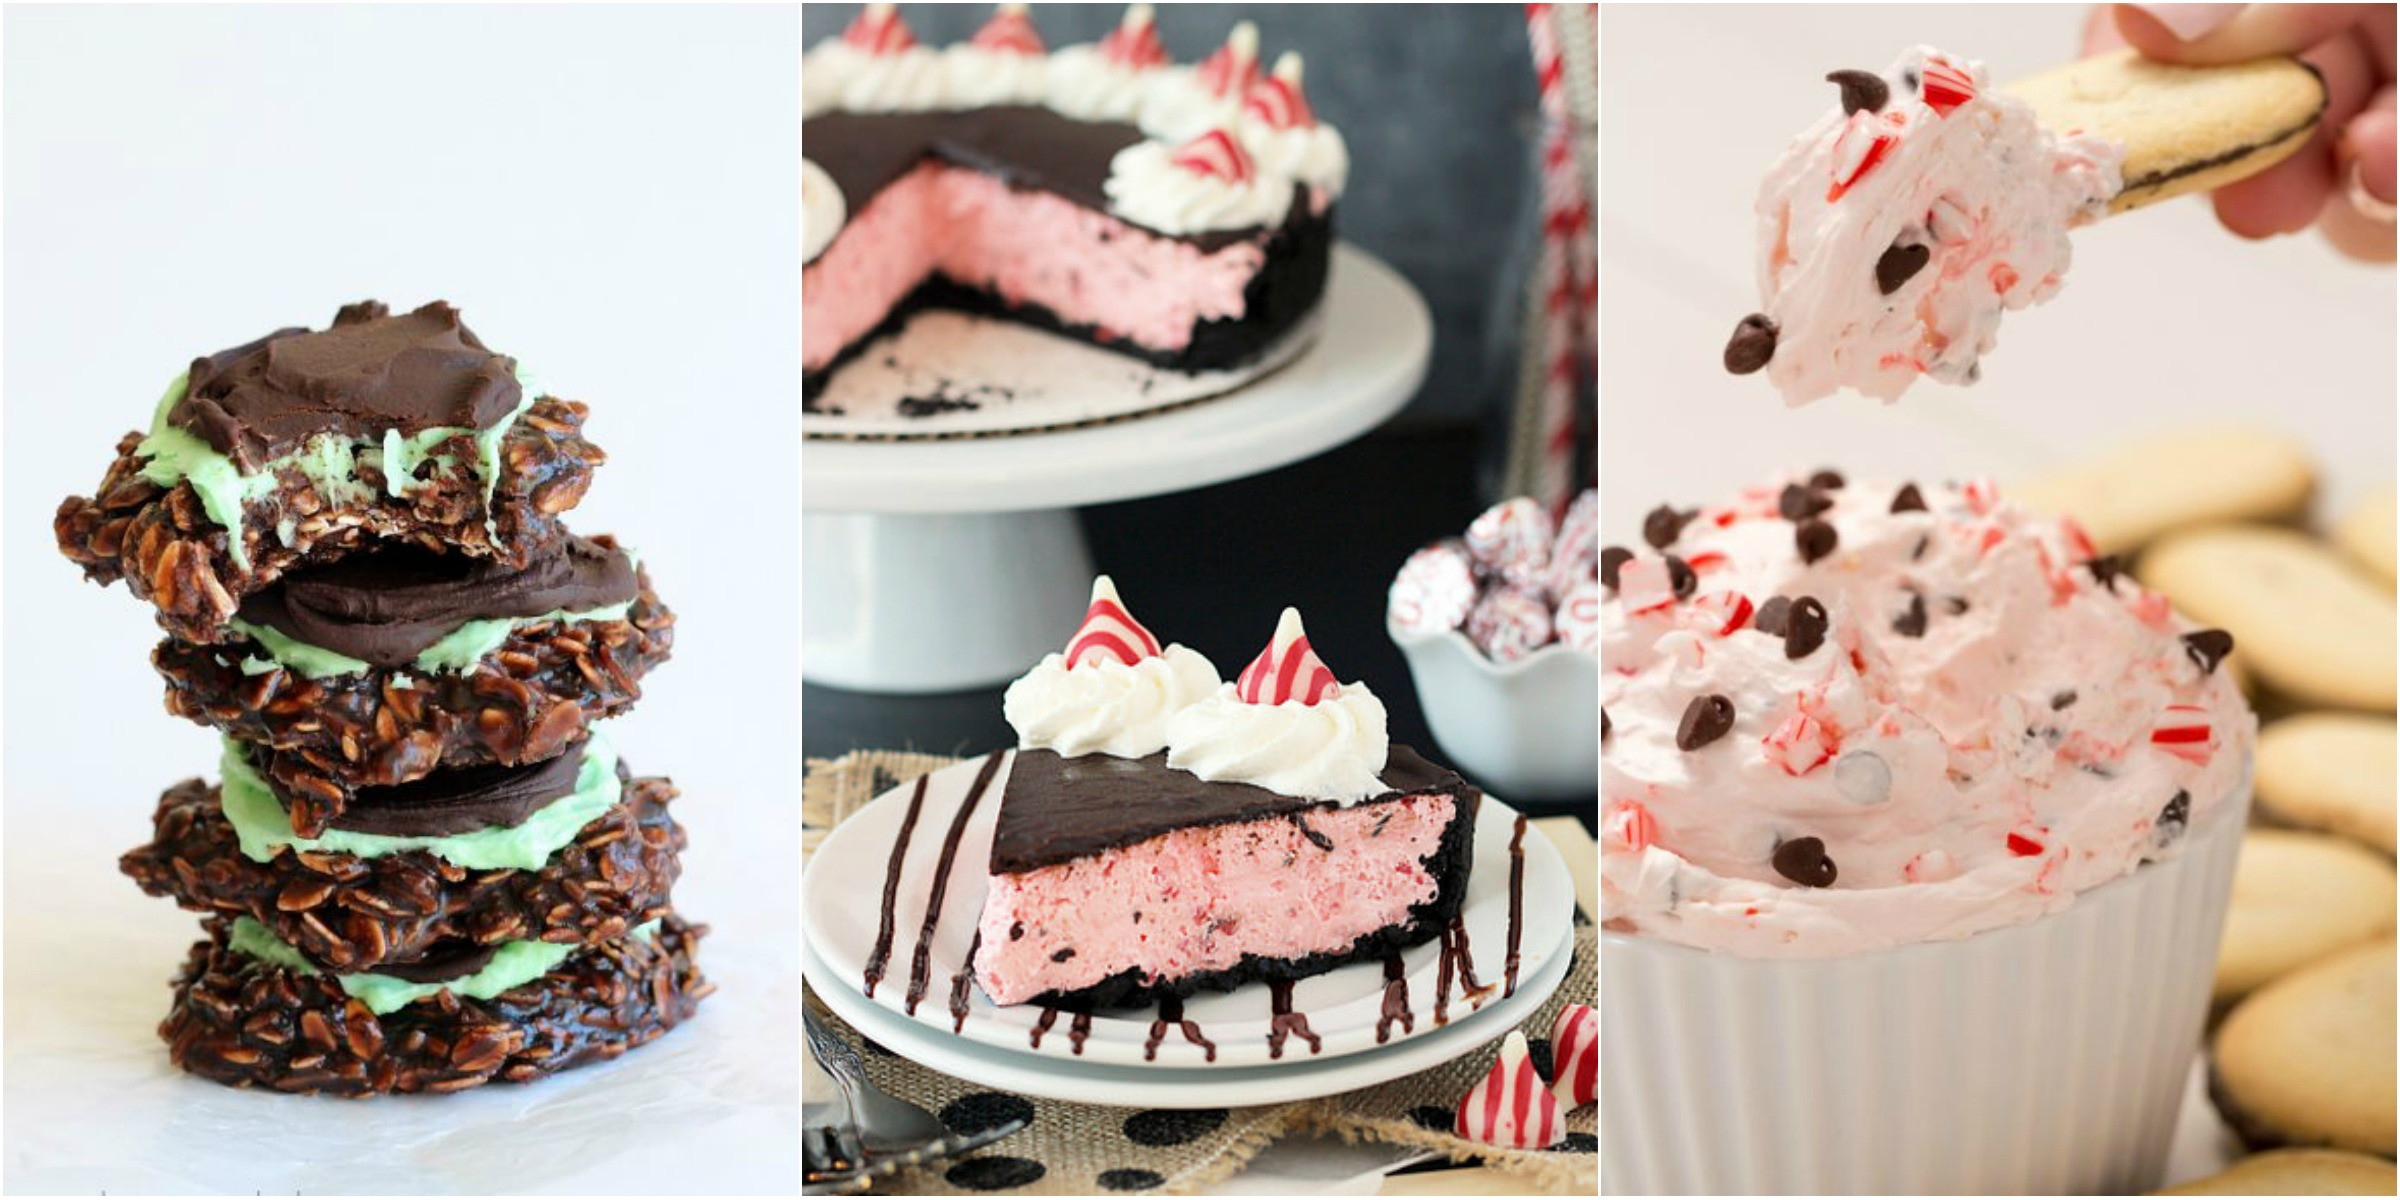 No Bake Holiday Desserts
 26 Best No Bake Christmas Desserts – Ideas for No Bake